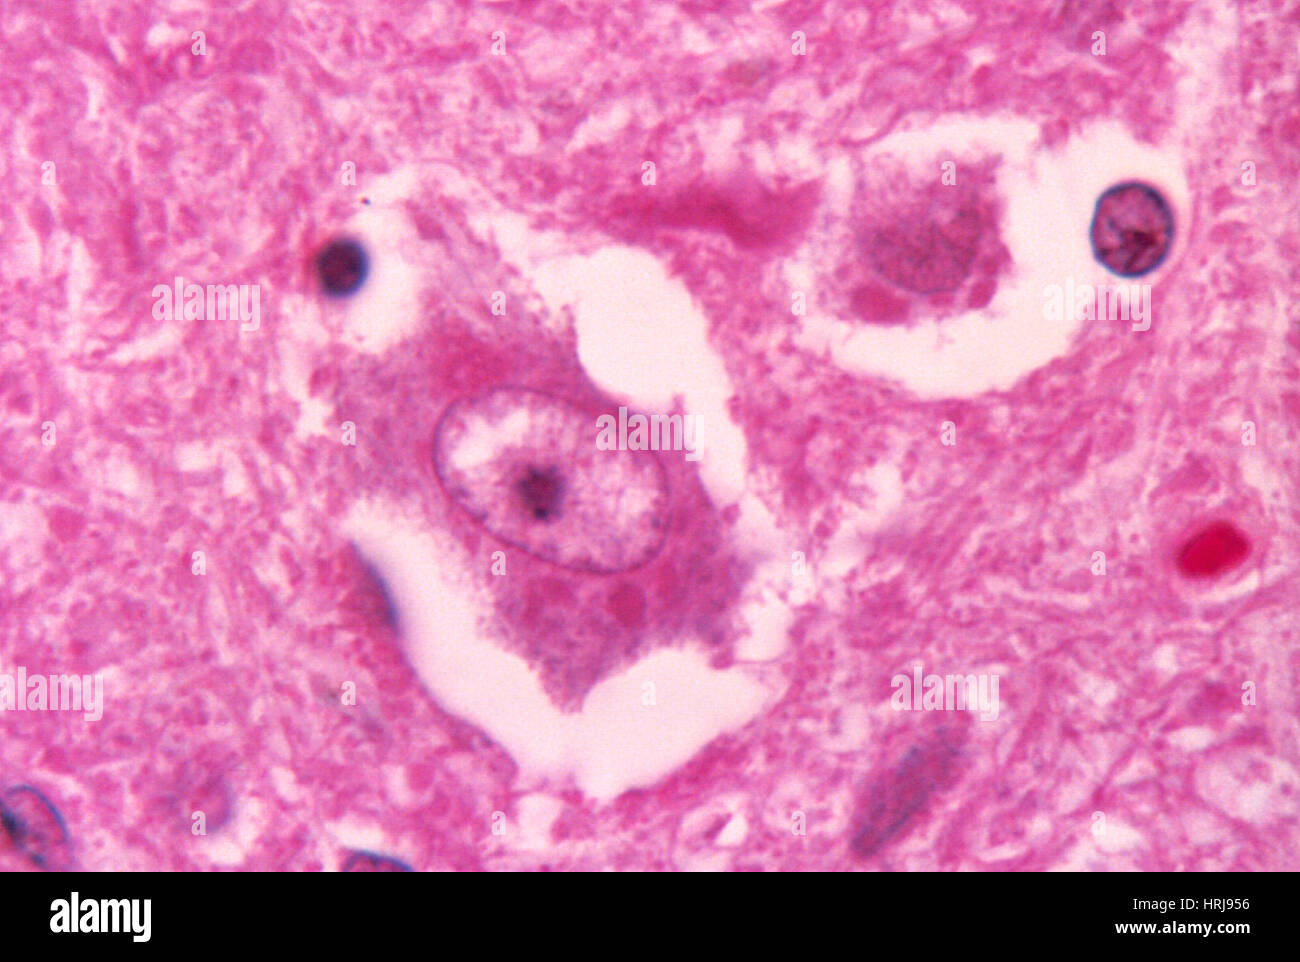 Rabies Virus, Negri Bodies, LM Stock Photo